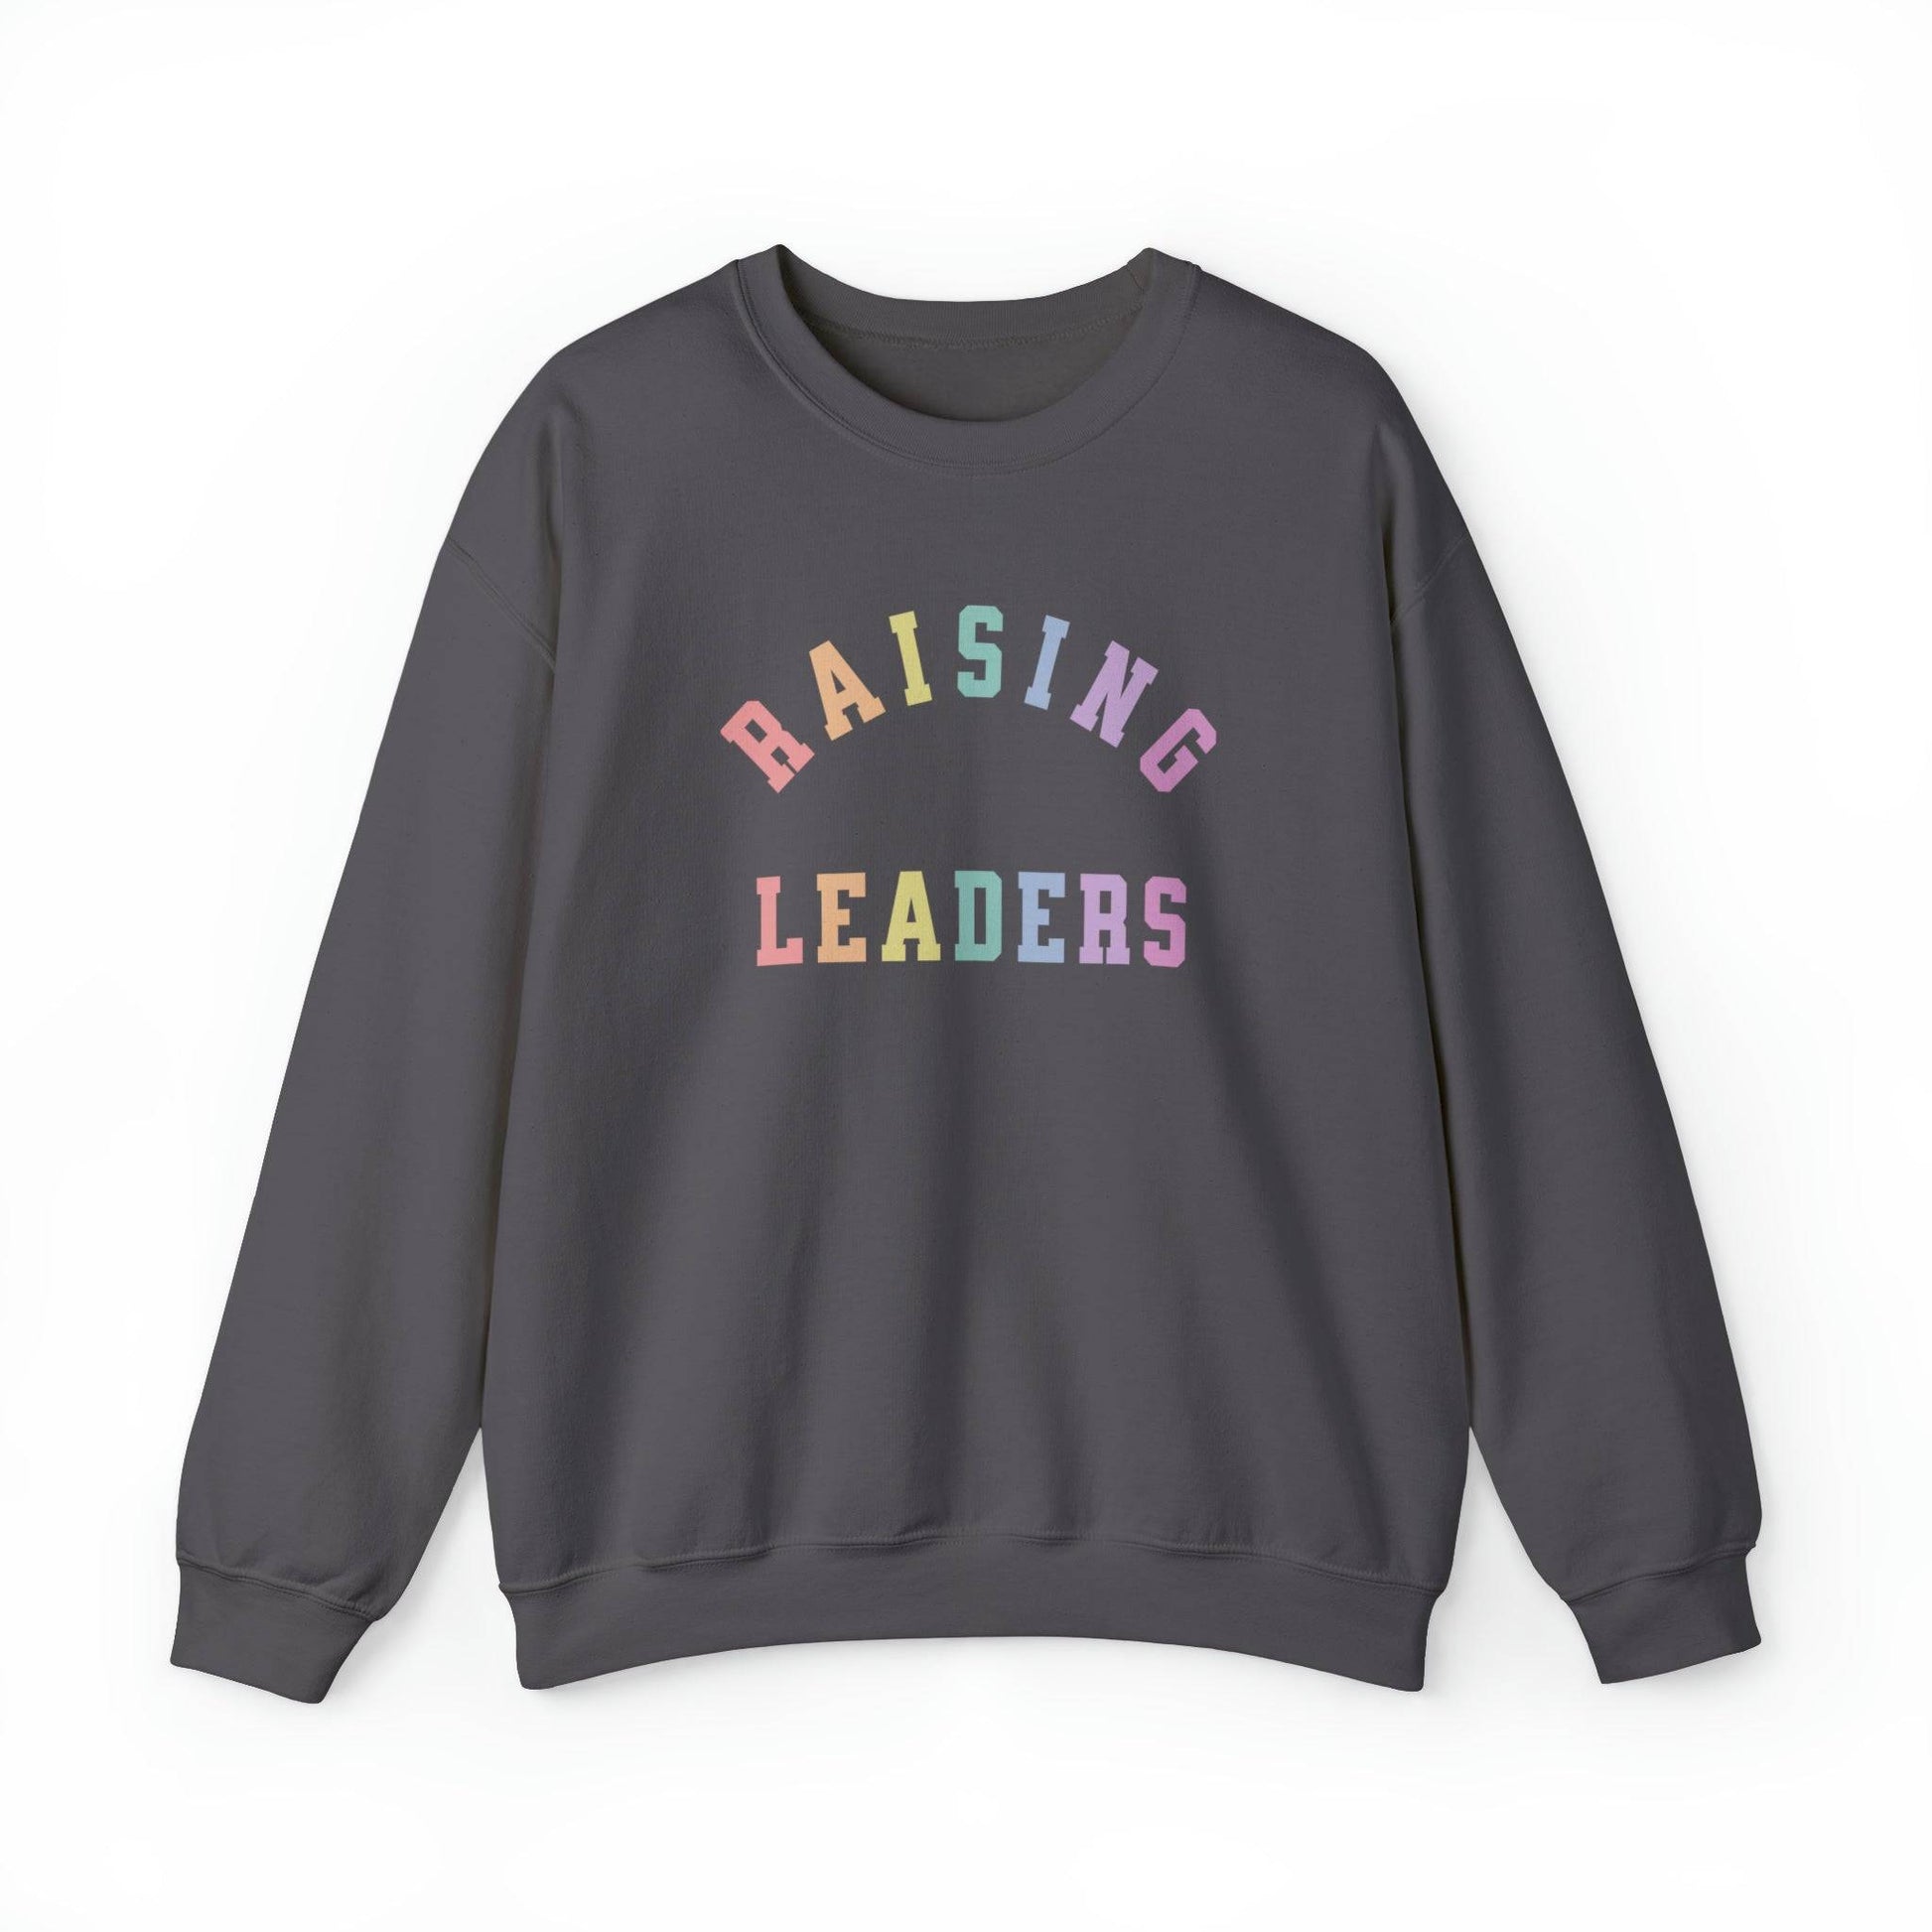 Raising Leaders Crewneck Pullover Sweater for Women